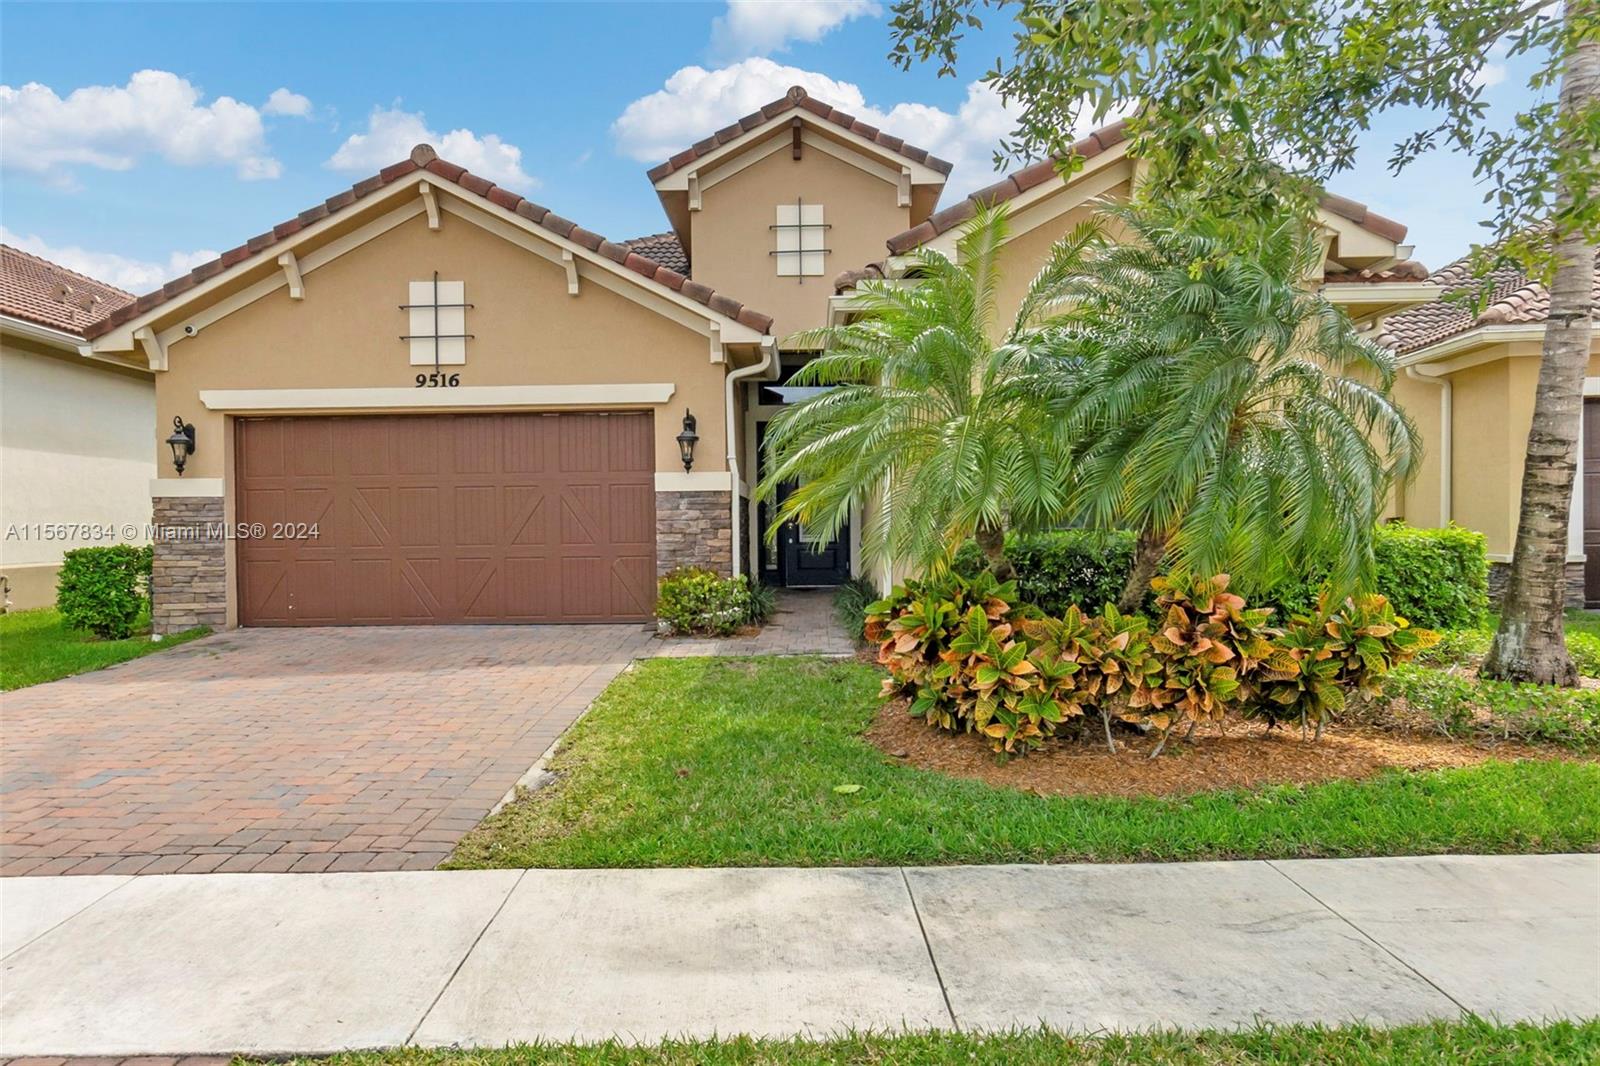 Property for Sale at 9516 Vallen Ct Ct, Parkland, Broward County, Florida - Bedrooms: 3 
Bathrooms: 3  - $860,000